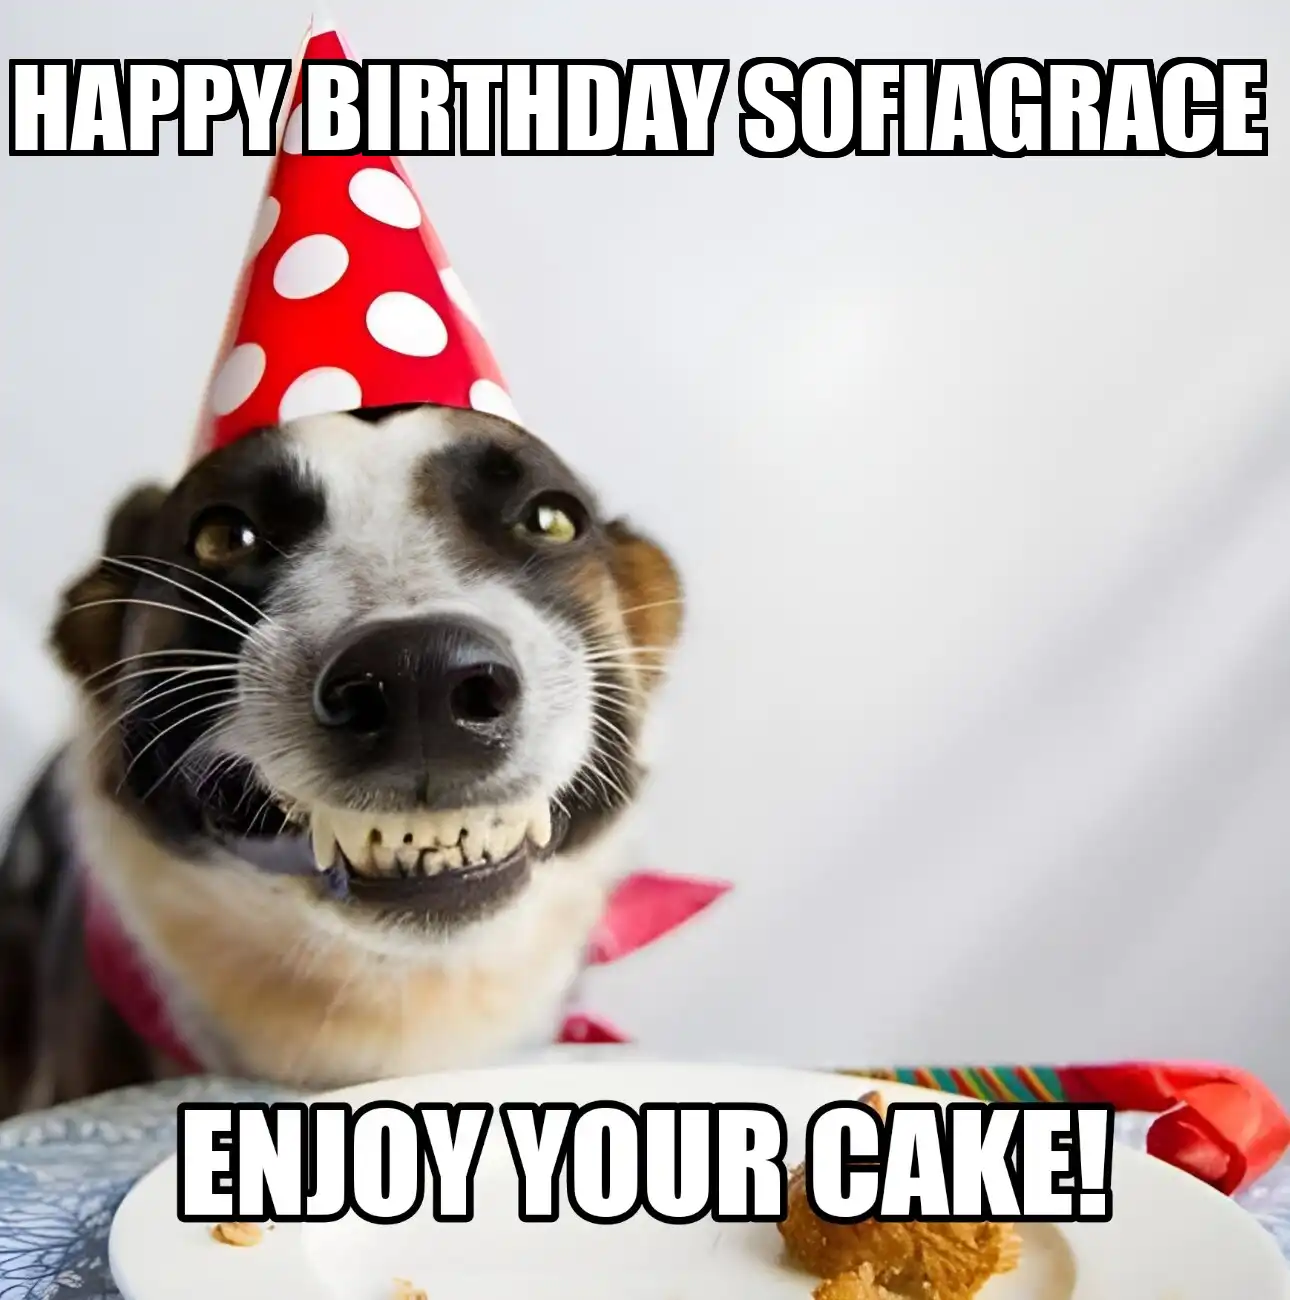 Happy Birthday Sofiagrace Enjoy Your Cake Dog Meme